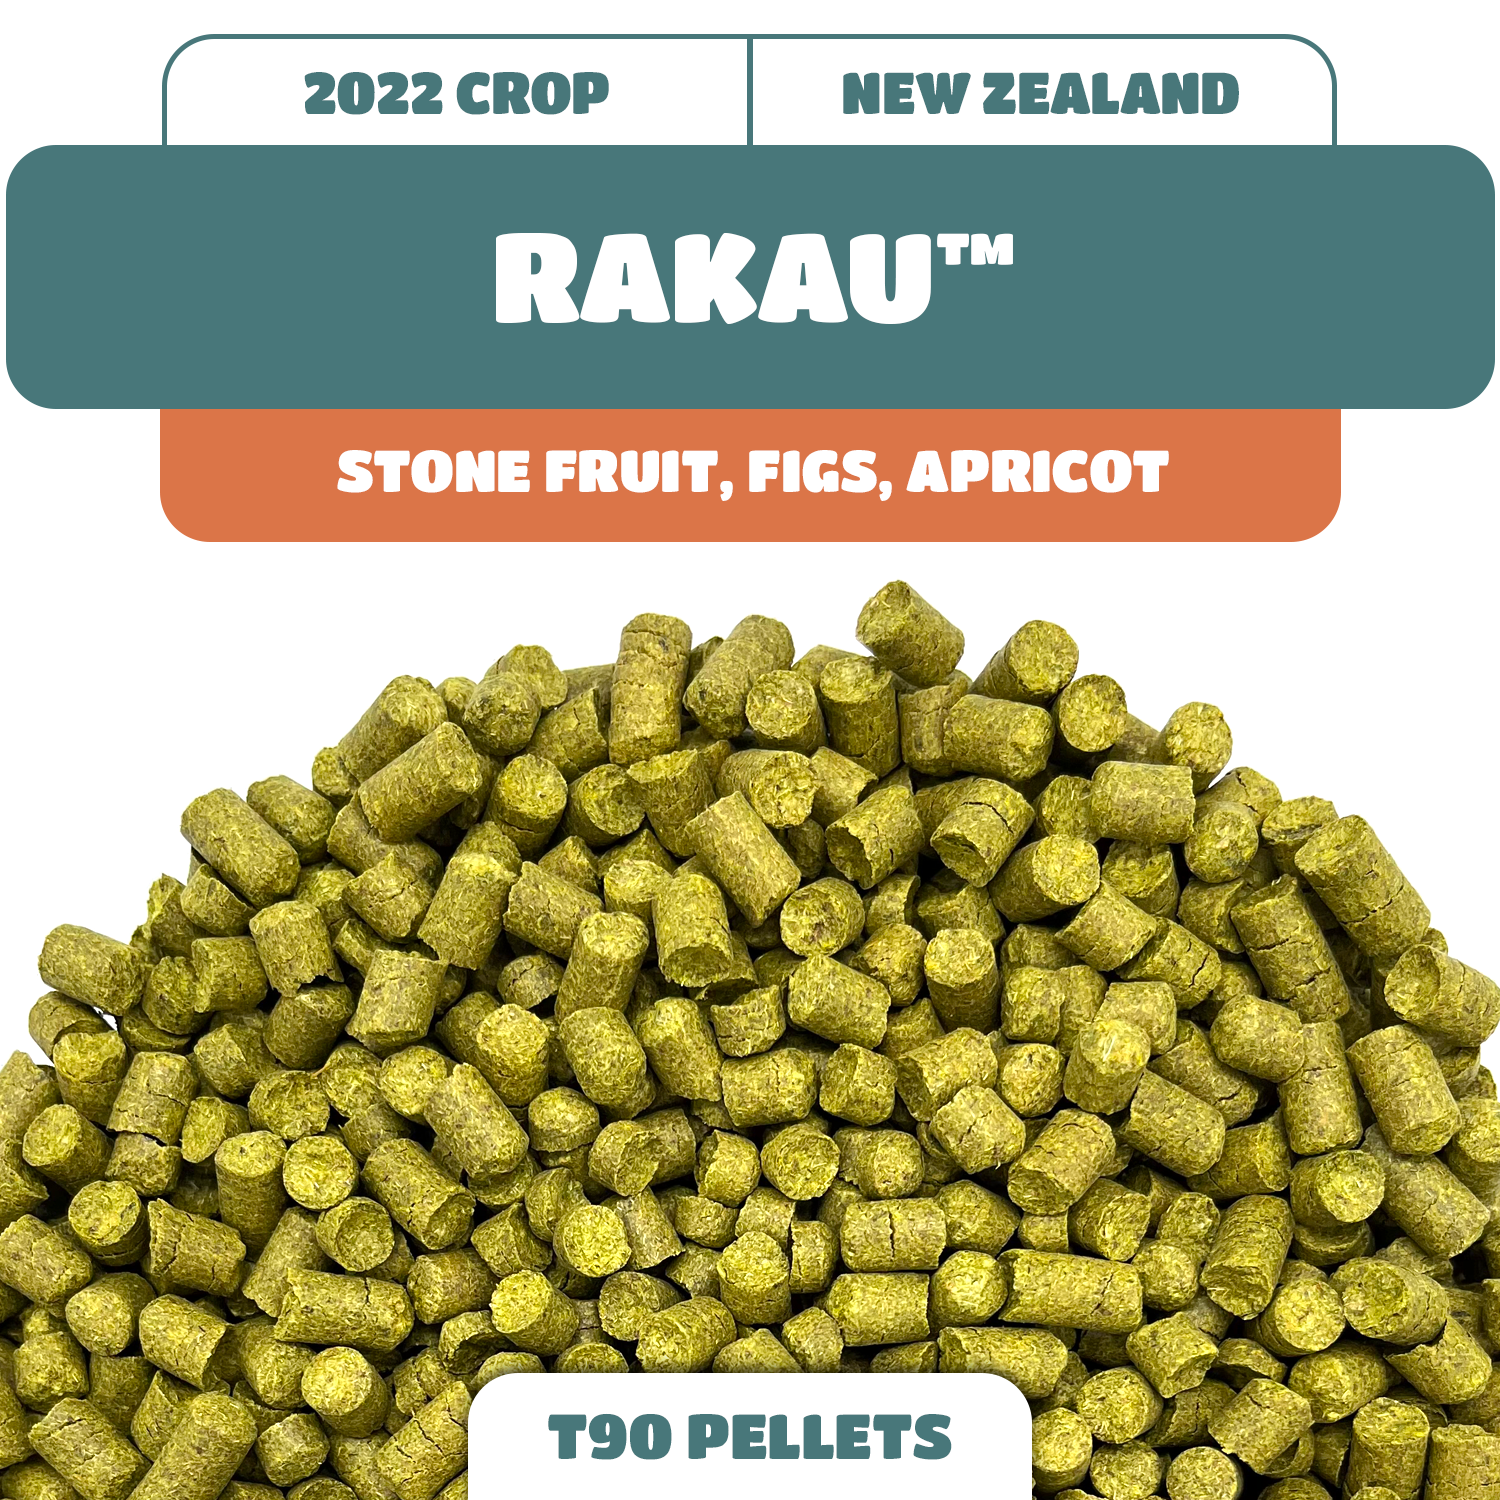 Rakau Hops - Wholesale bulk hops online New Zealand hops